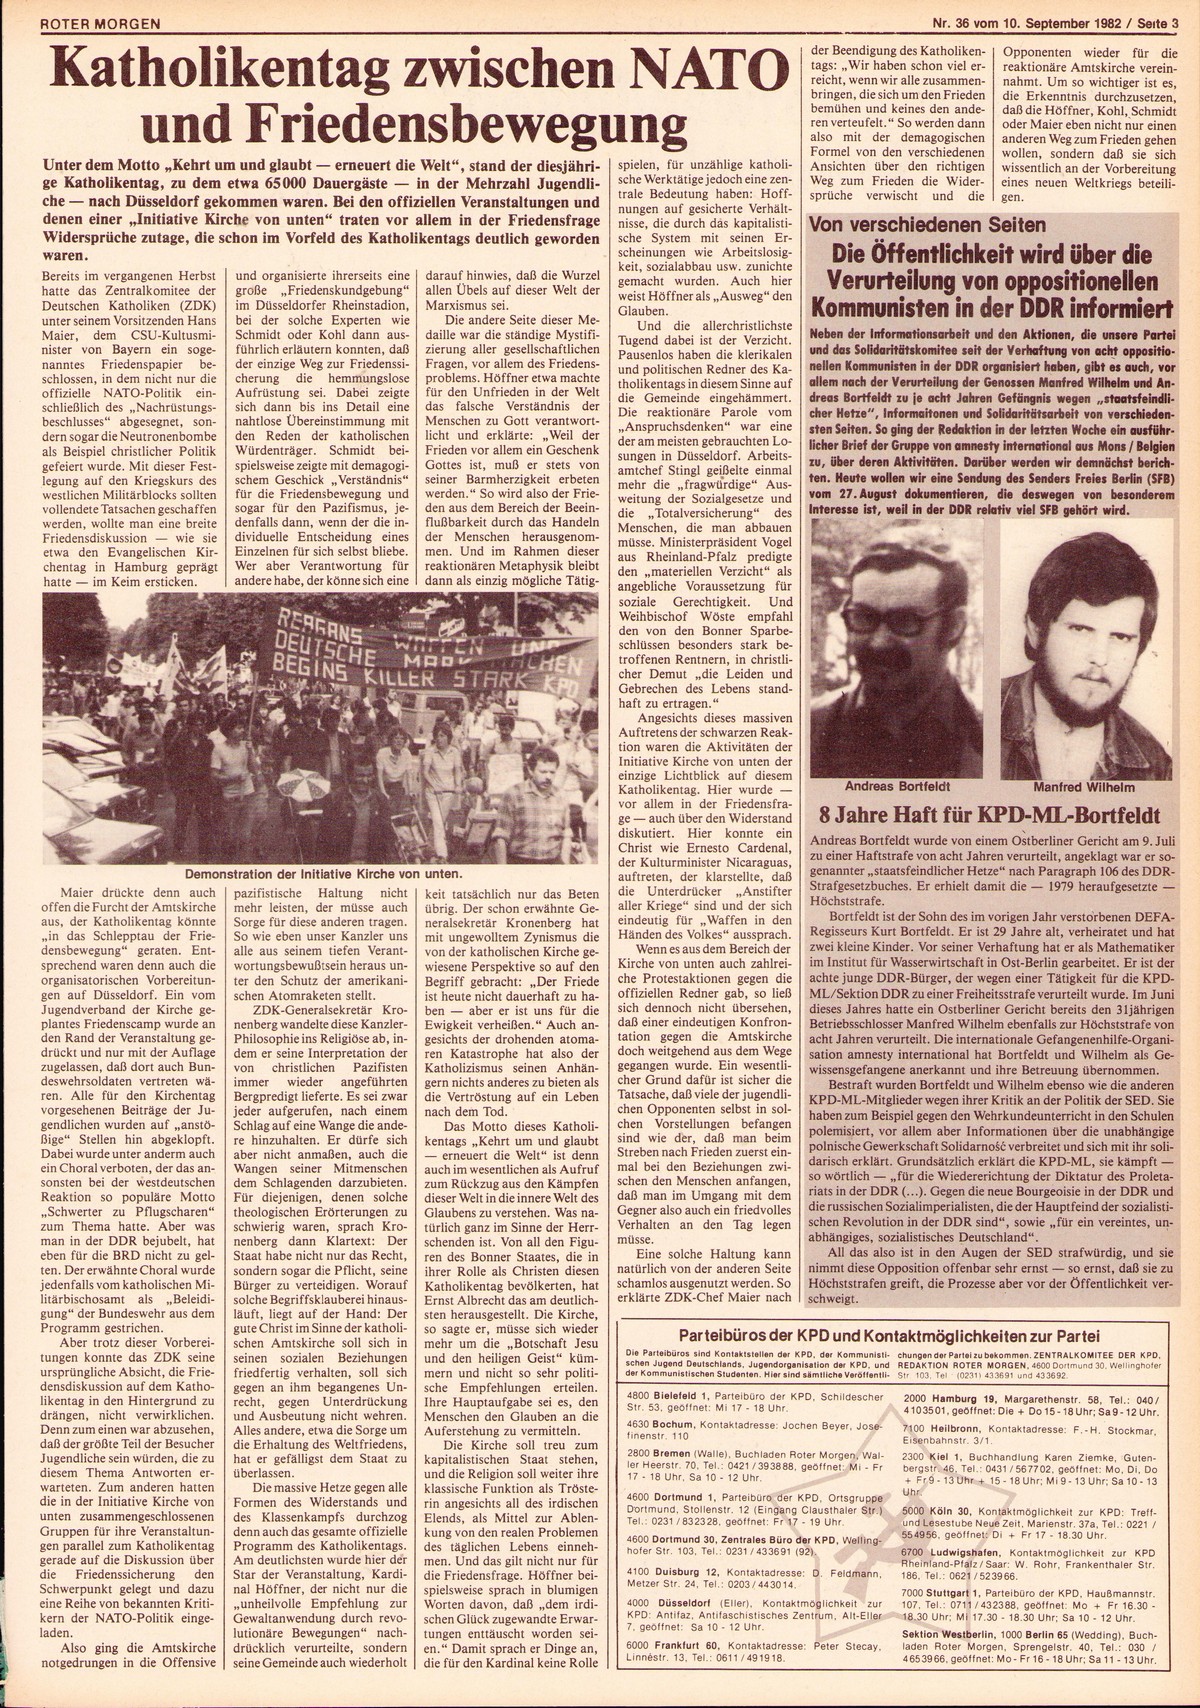 Roter Morgen, 16. Jg., 10. September 1982, Nr. 36, Seite 3